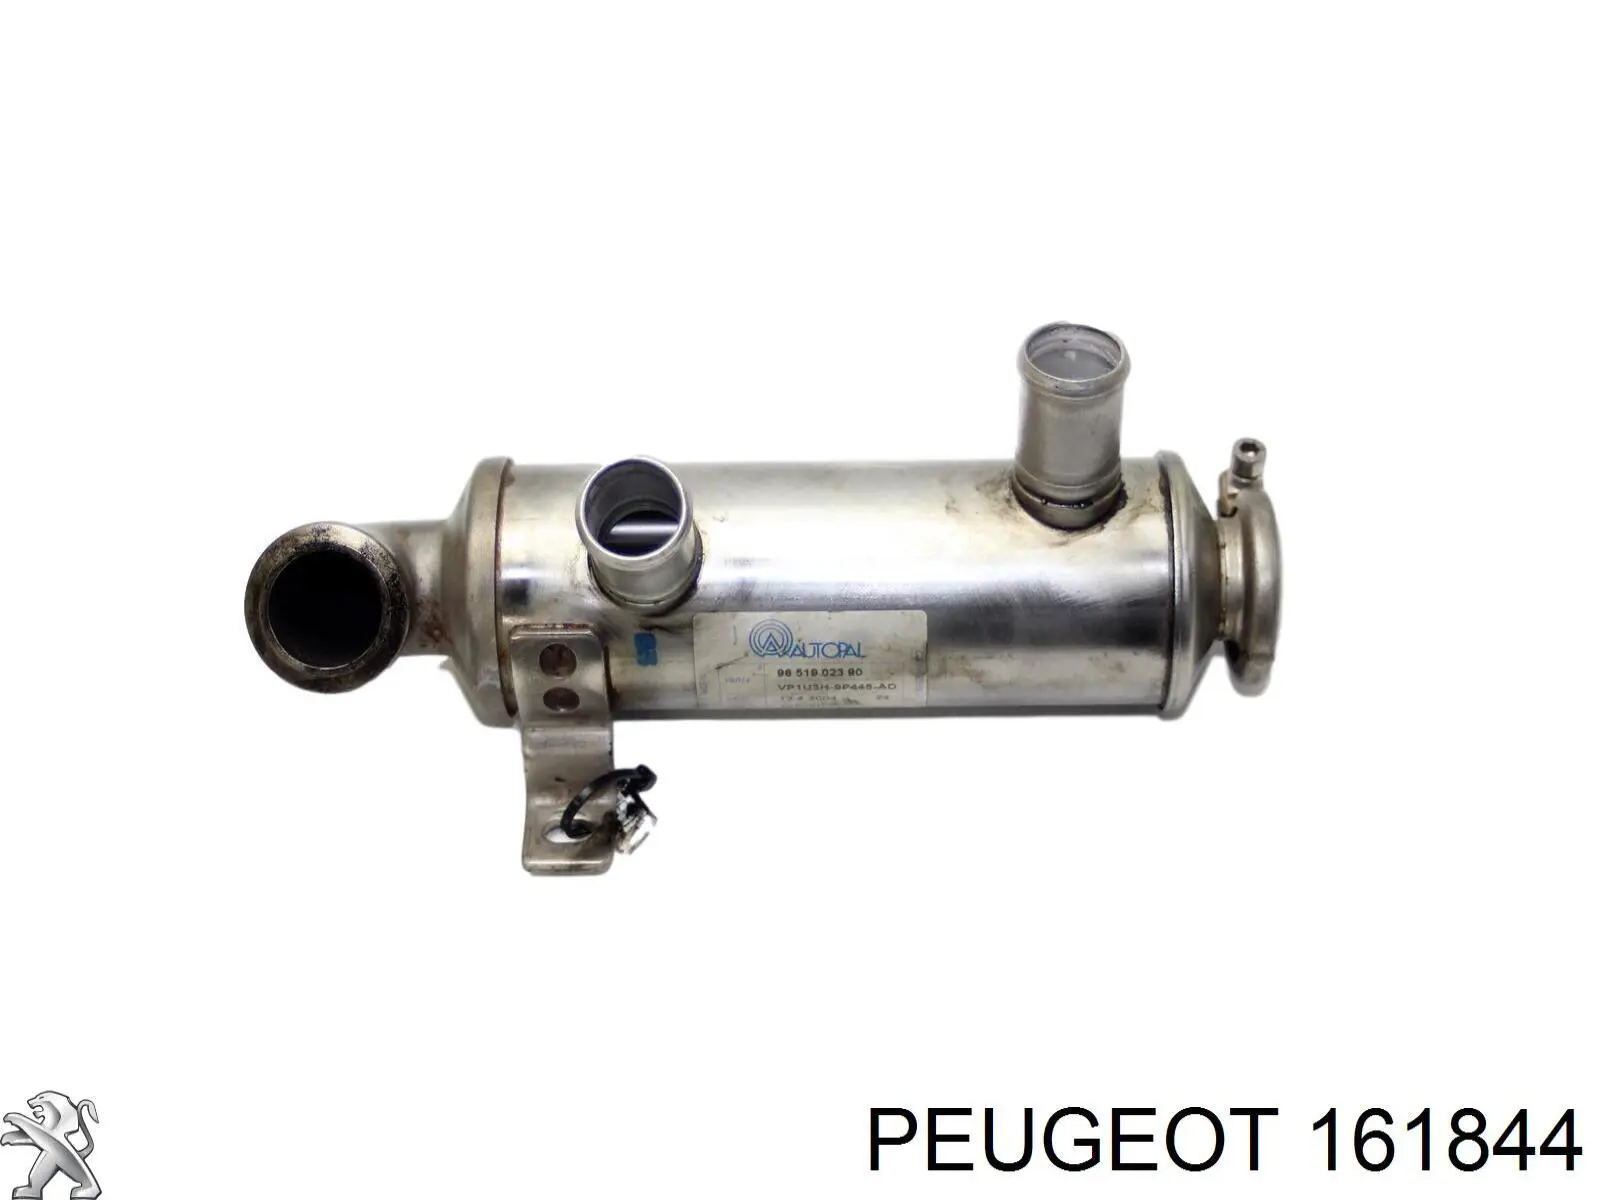 Enfriador EGR de recirculación de gases de escape 161844 Peugeot/Citroen